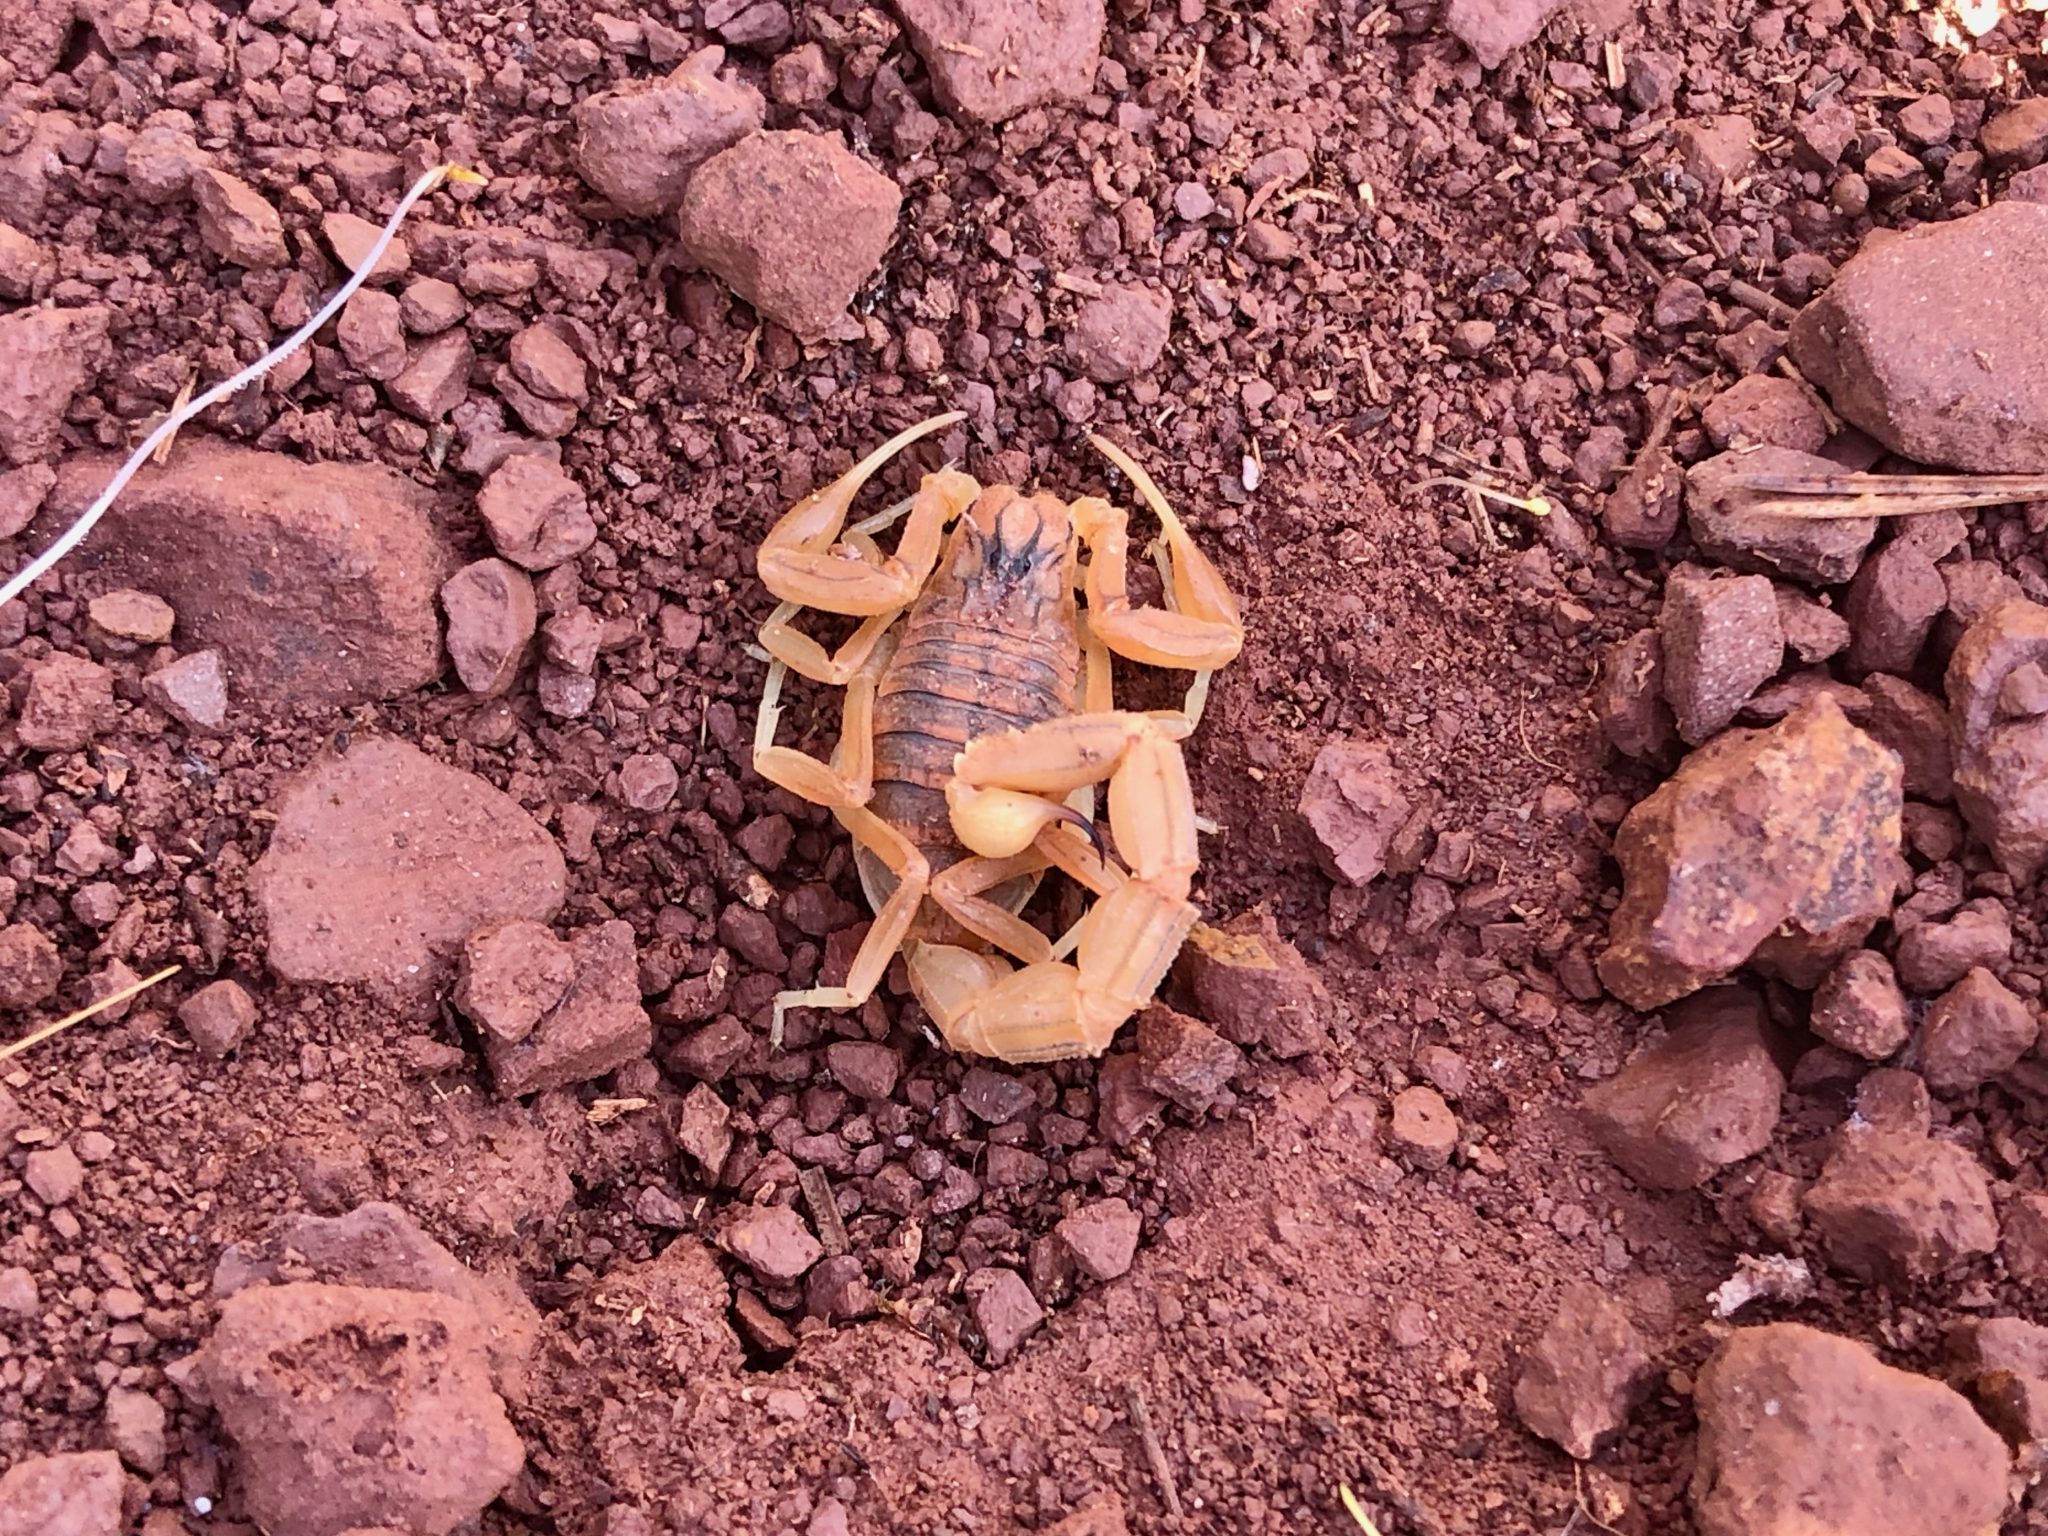 Small scorpion found in the Sierra Calderona de Gilet, Valencia, Spain.